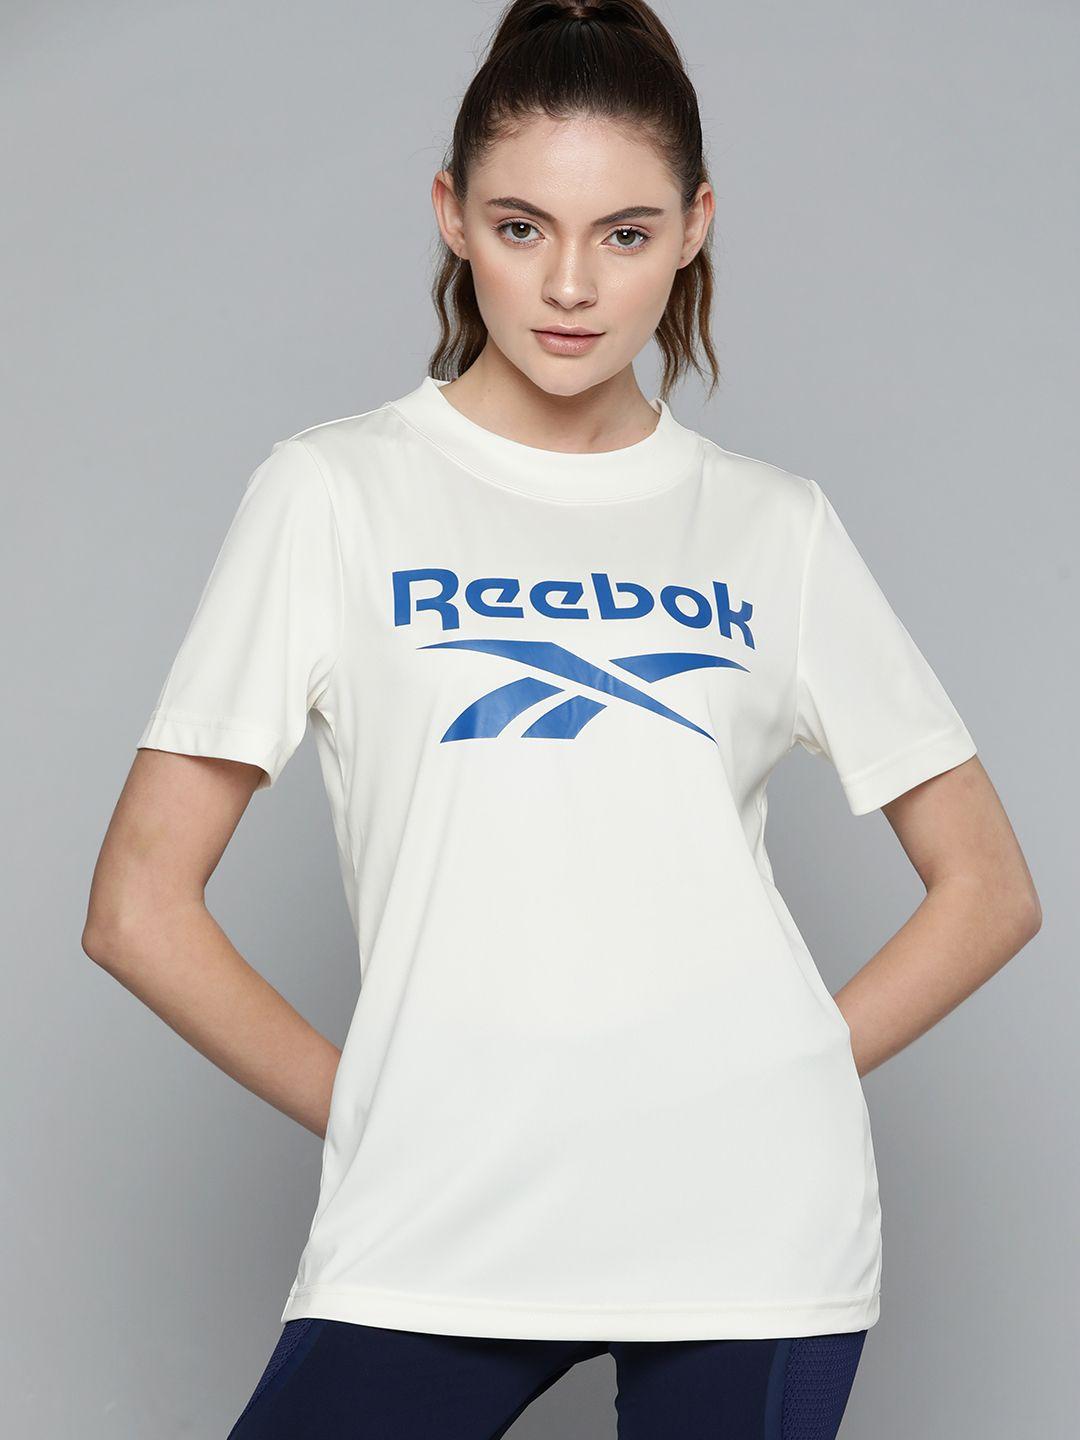 reebok women cream-coloured & blue brand logo printed slim fit t-shirt